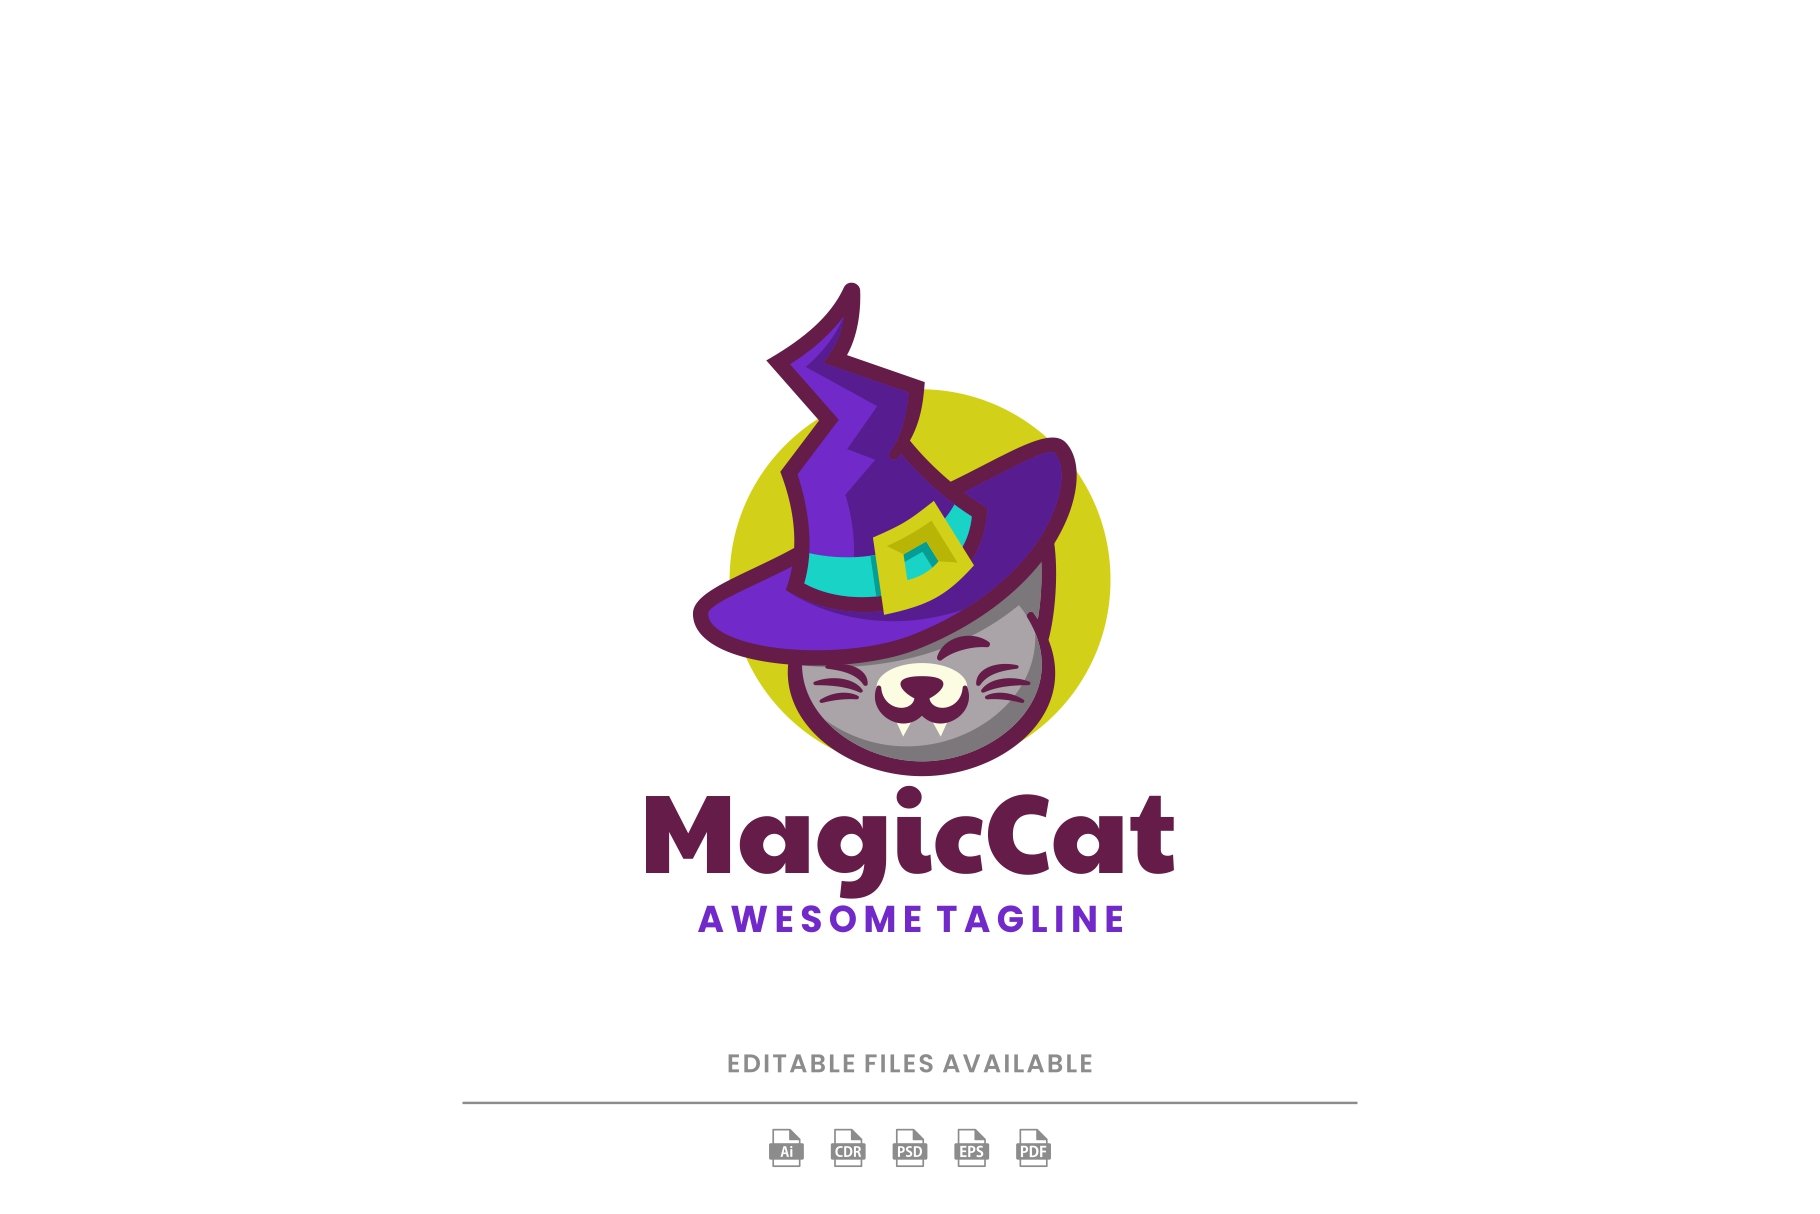 Magic Cat Cartoon Logo cover image.